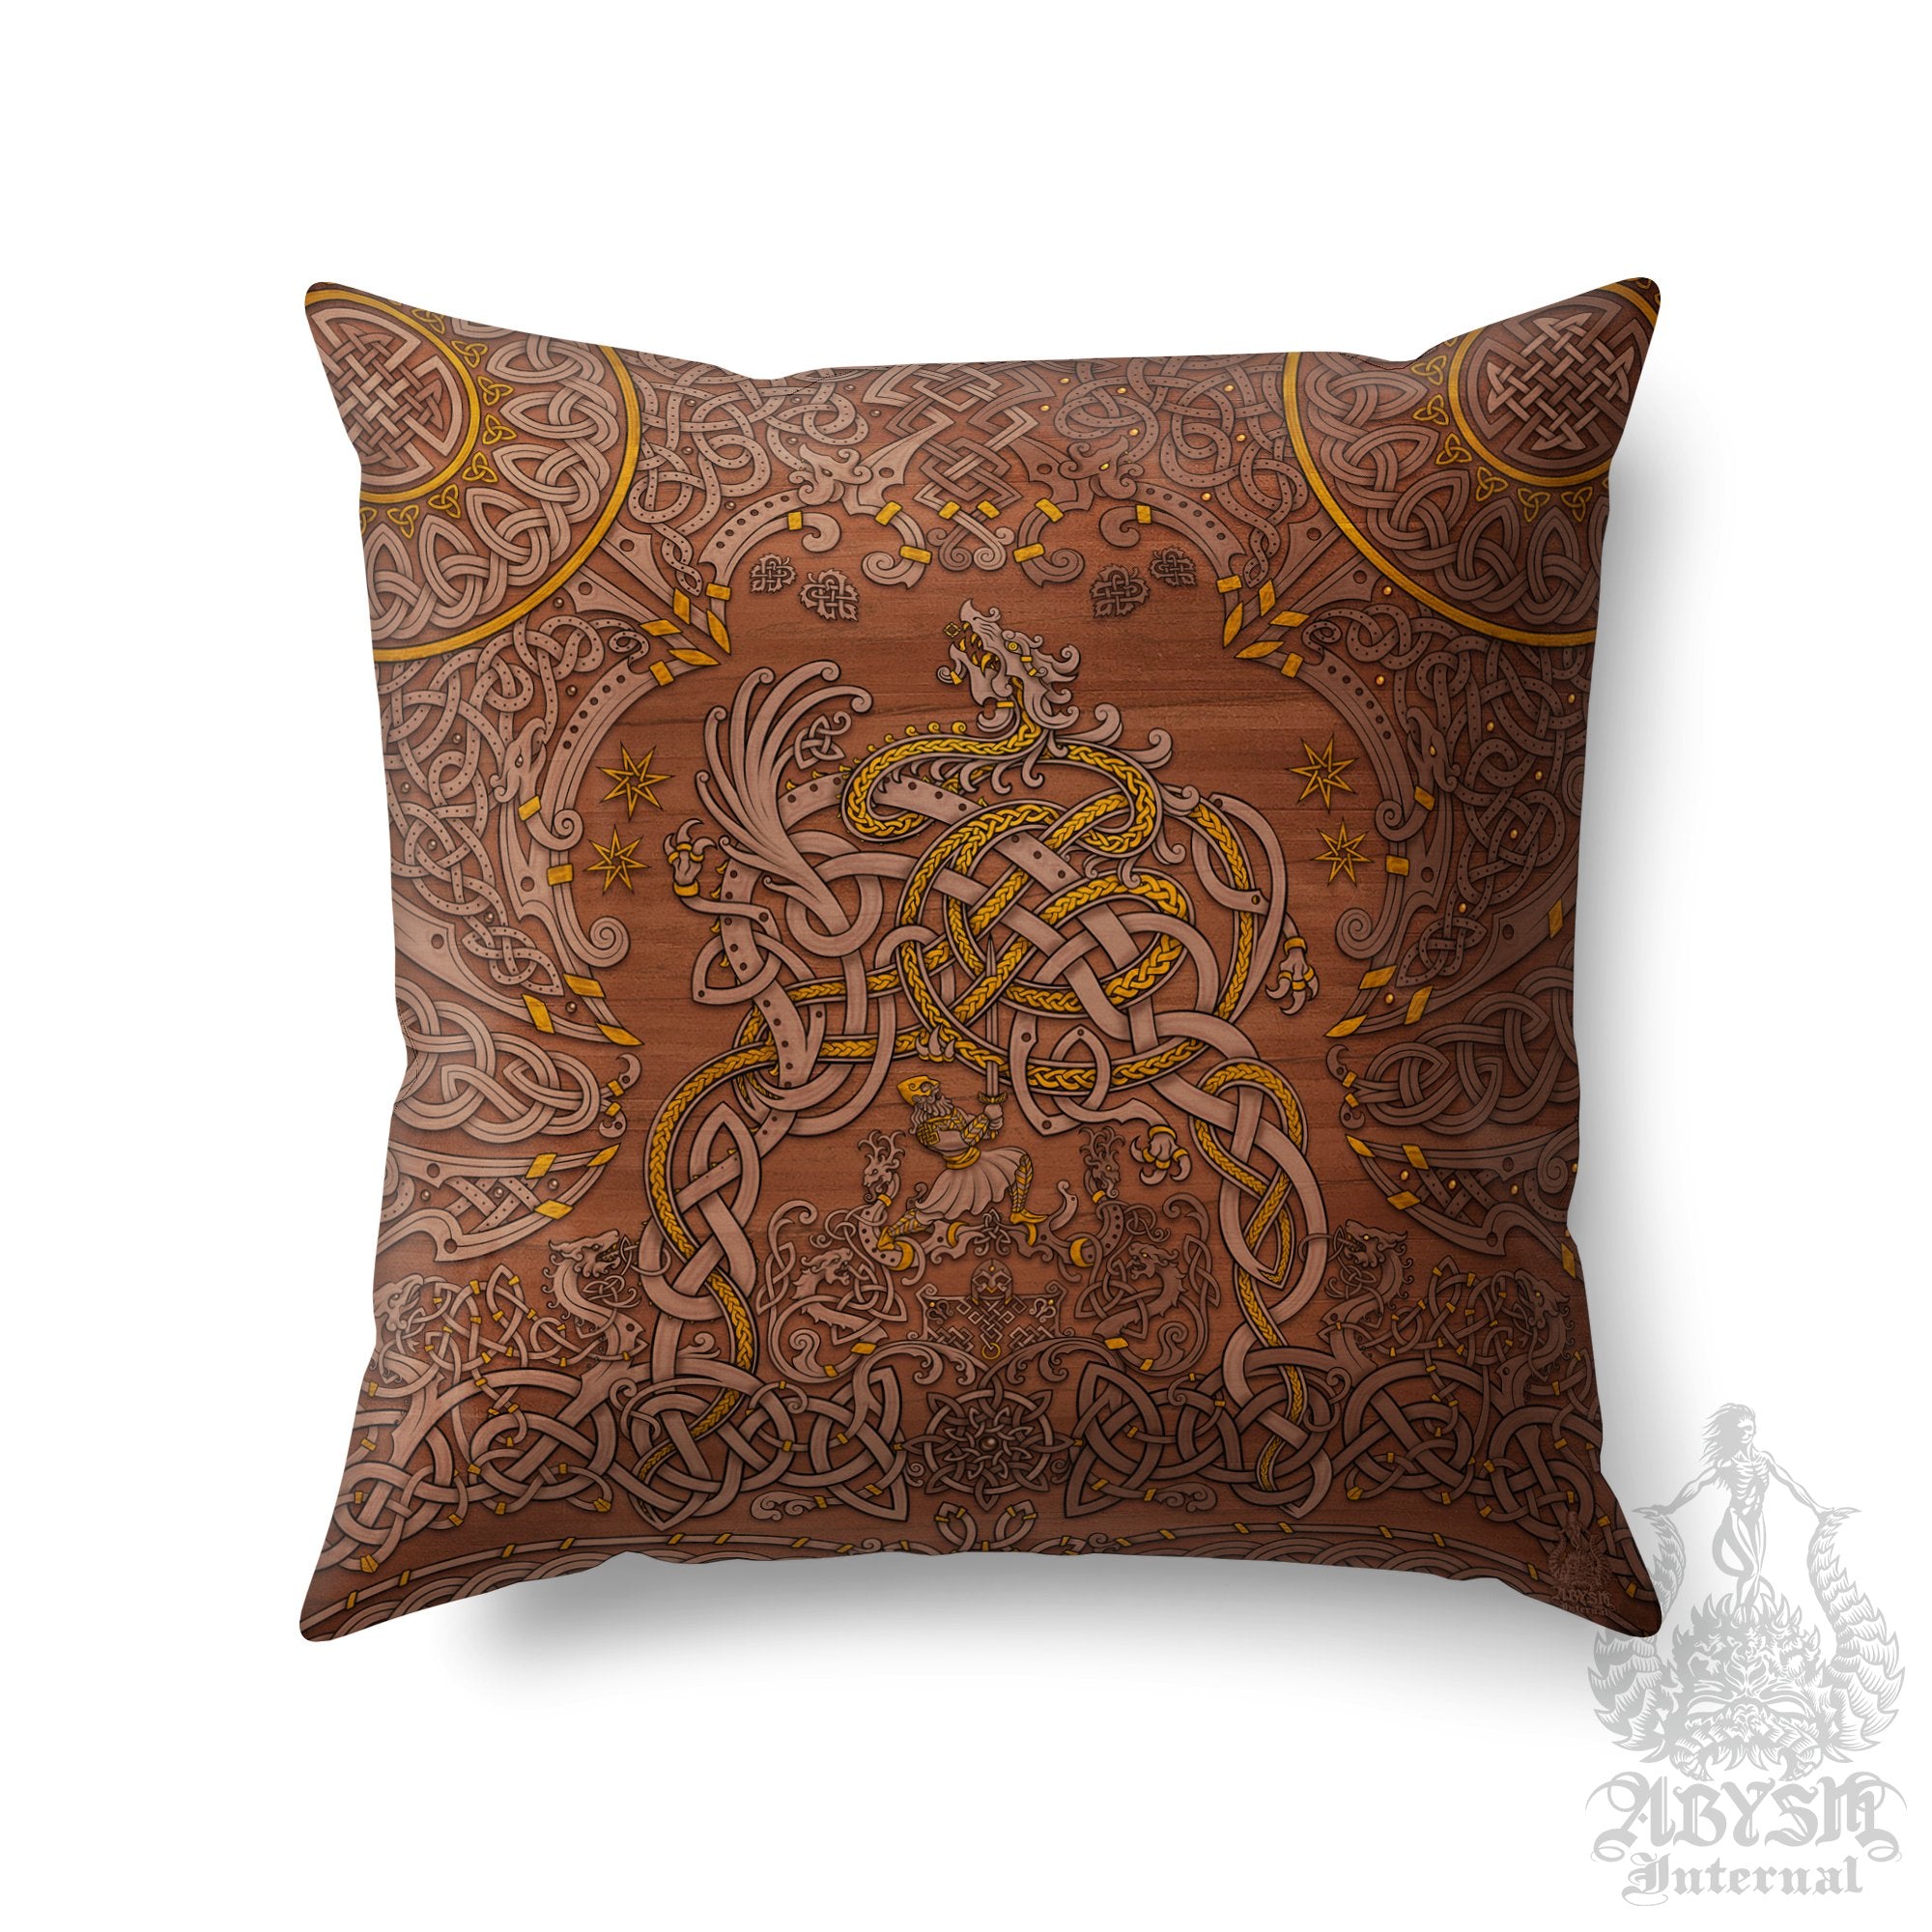 Nordic Throw Pillow, Decorative Accent Pillow, Square Cushion Cover, Gamer Room Decor, Dragon Fafnir, Viking Art, Alternative Home - Wood - Abysm Internal